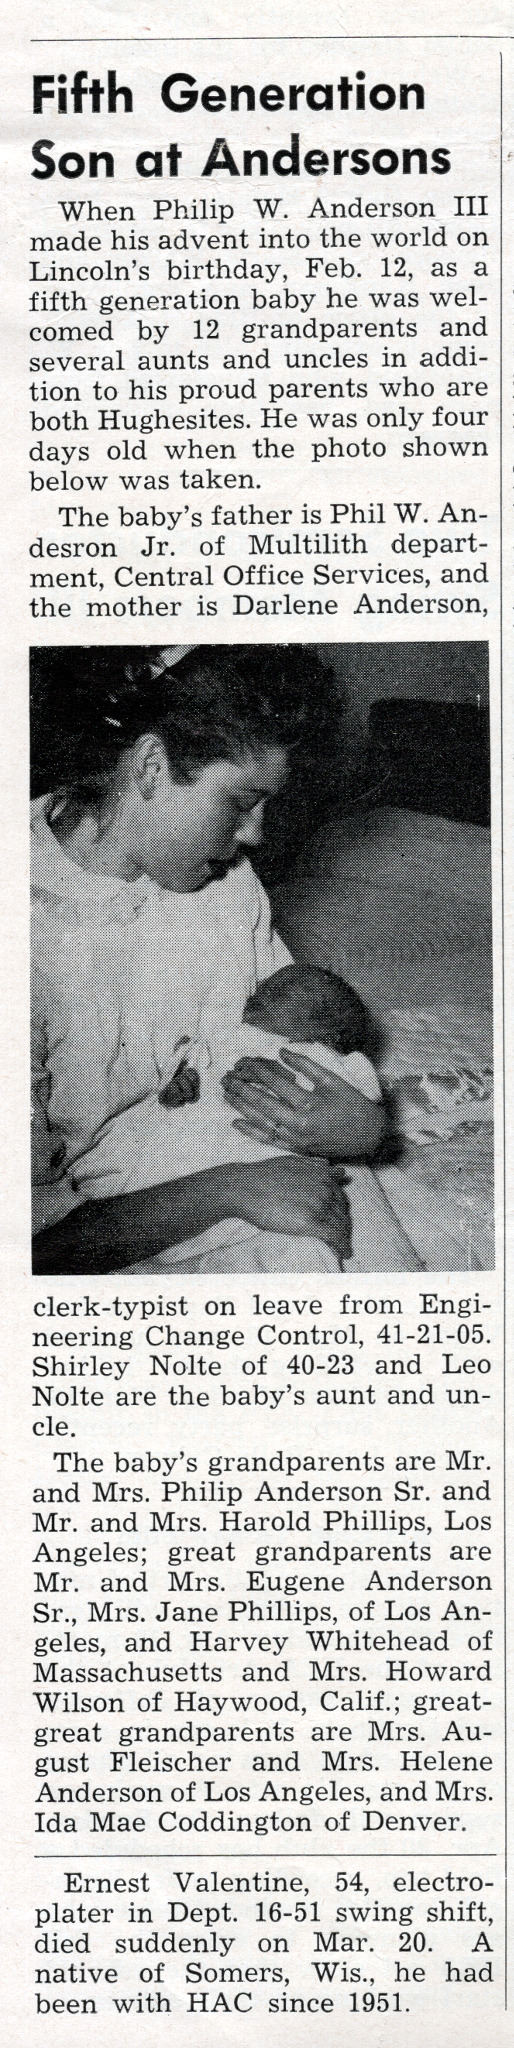 5th Generation Son - Hughes News - 1956